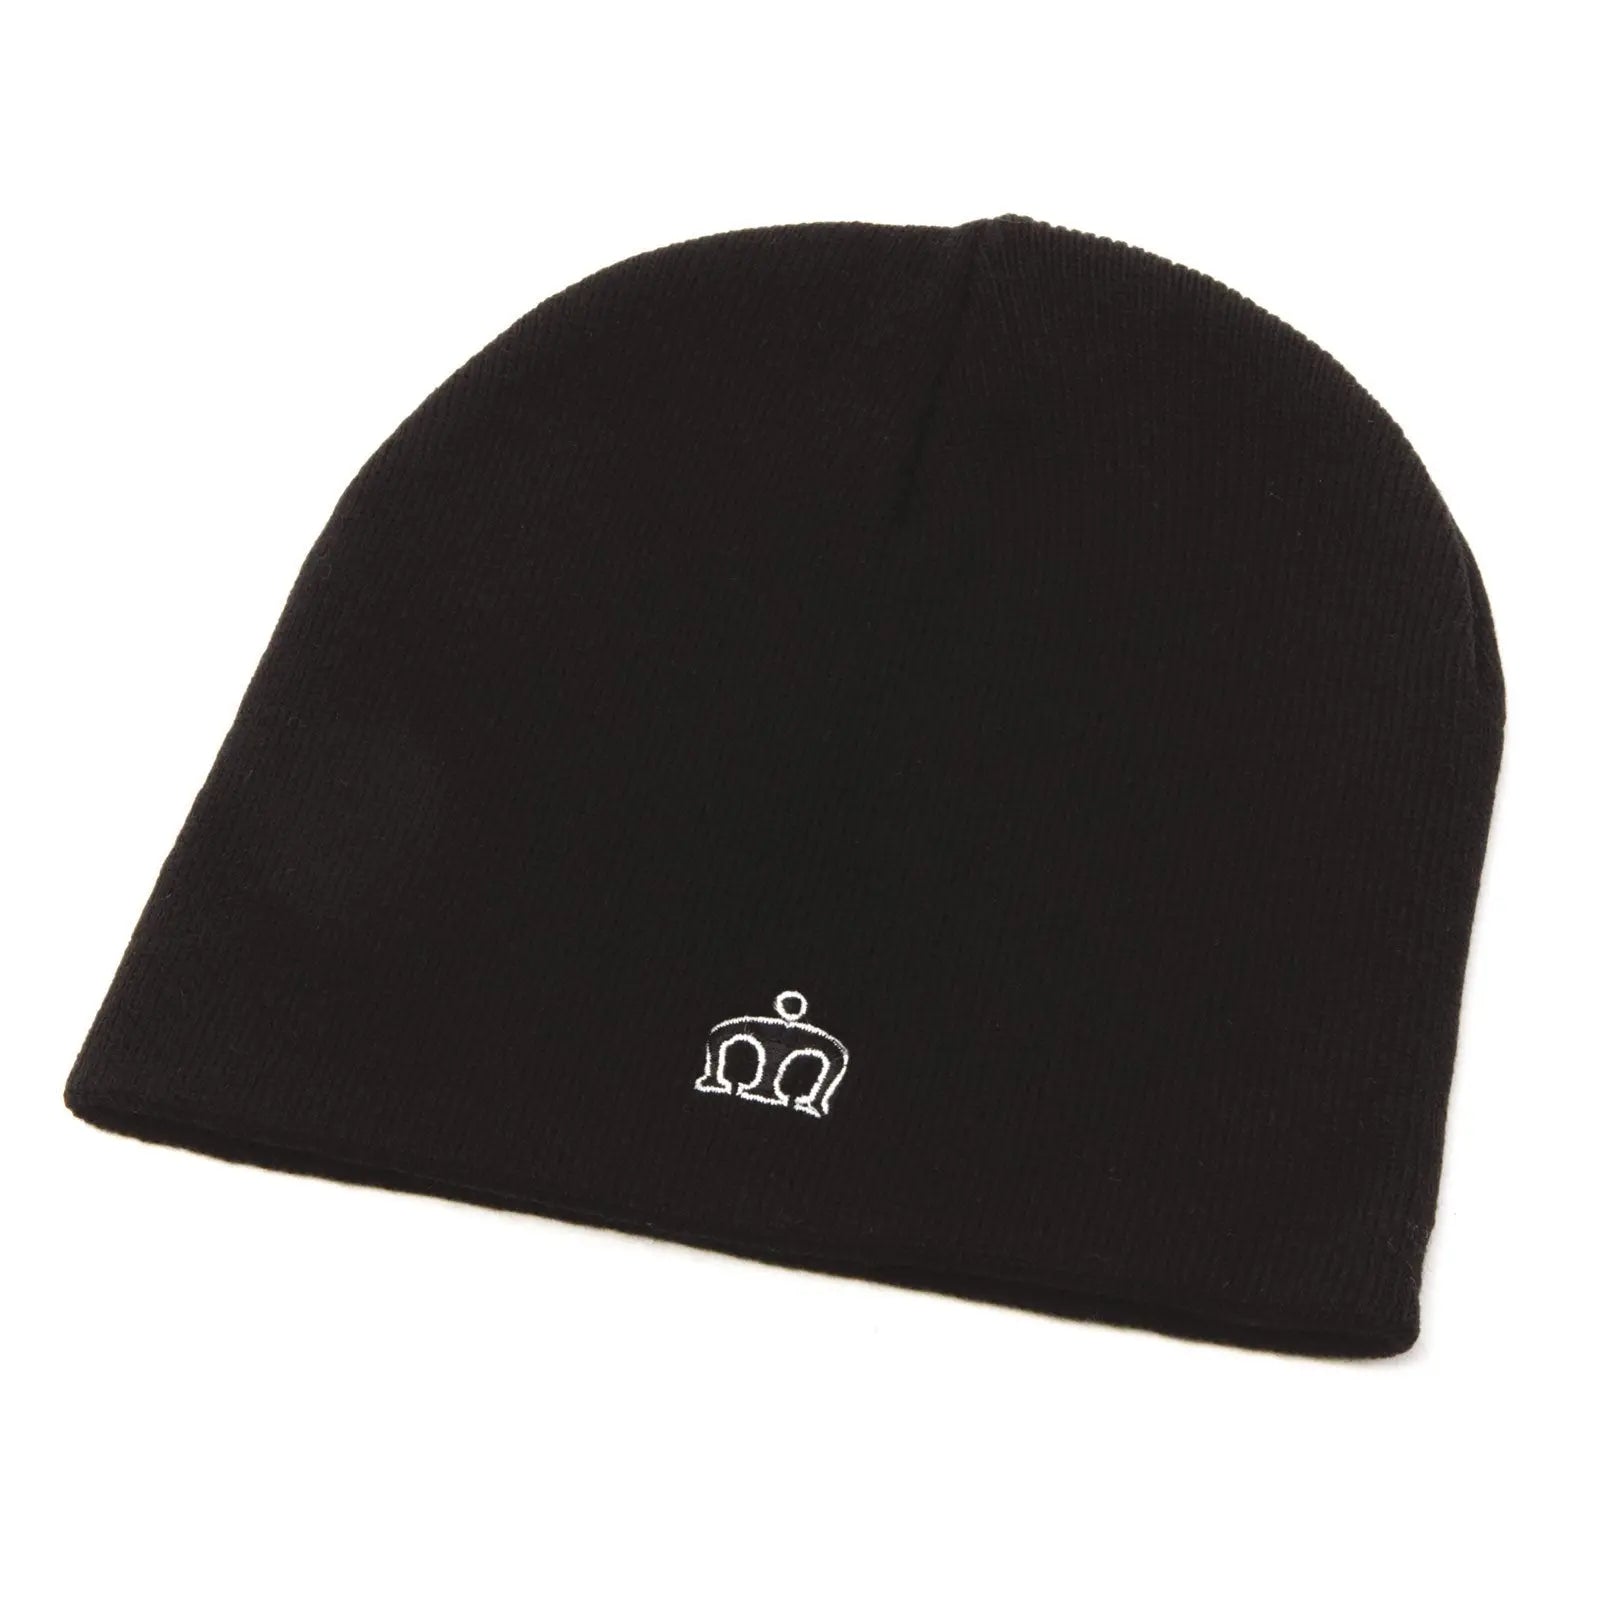 Merc London Collins Beanie Hat - Black From Woven Durham